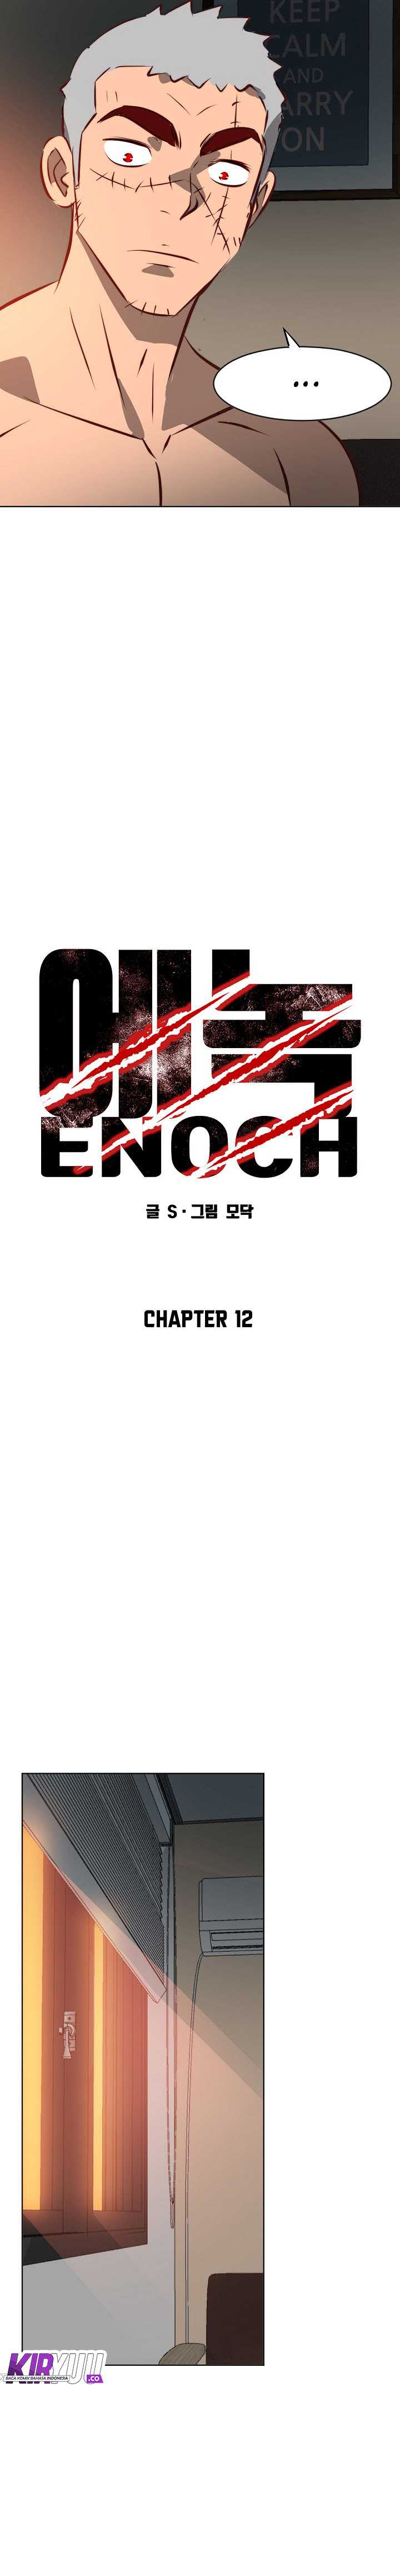 Enoch Chapter 12